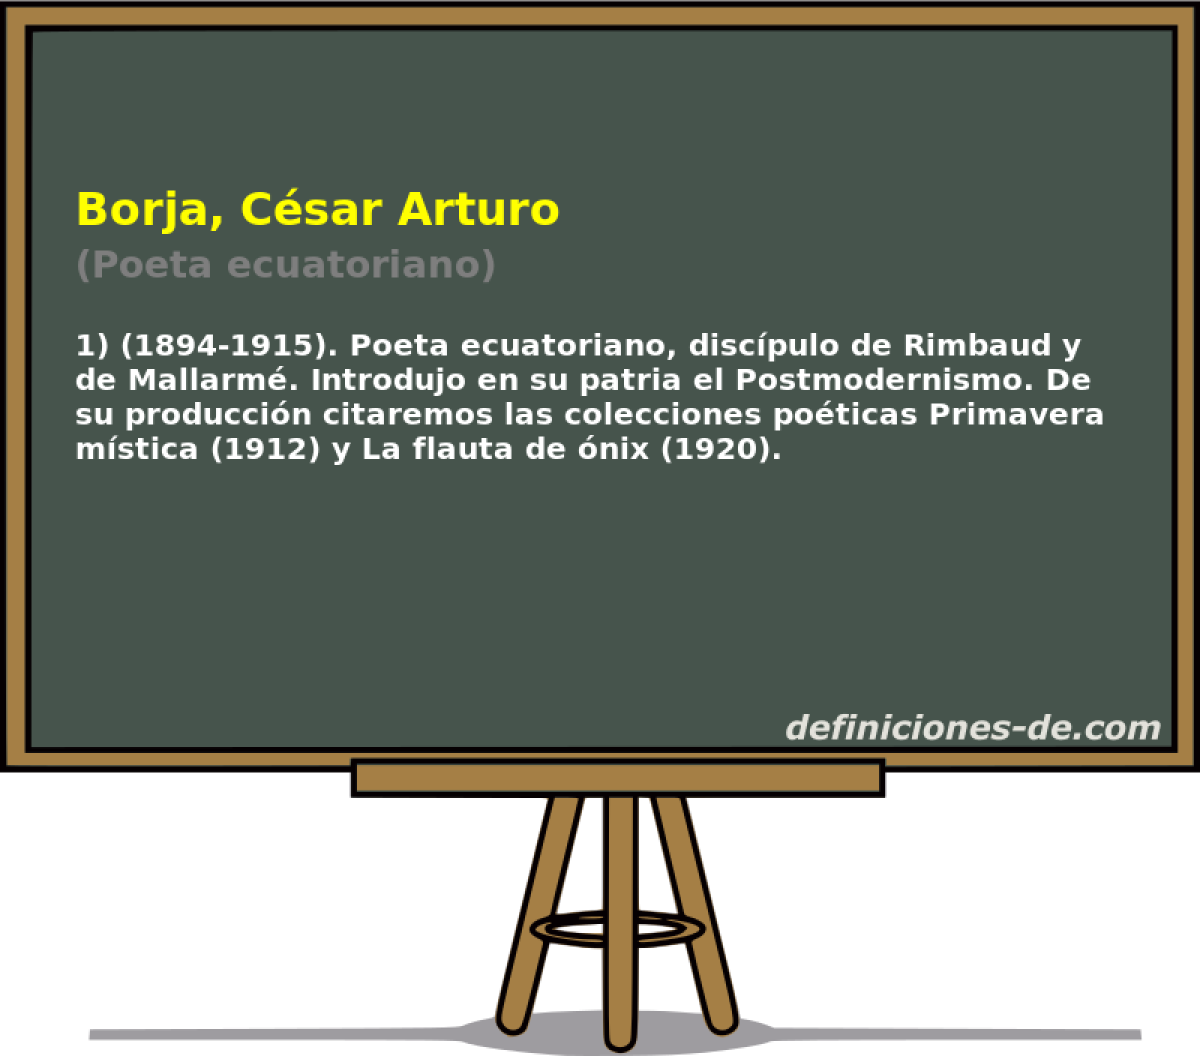 Borja, Csar Arturo (Poeta ecuatoriano)